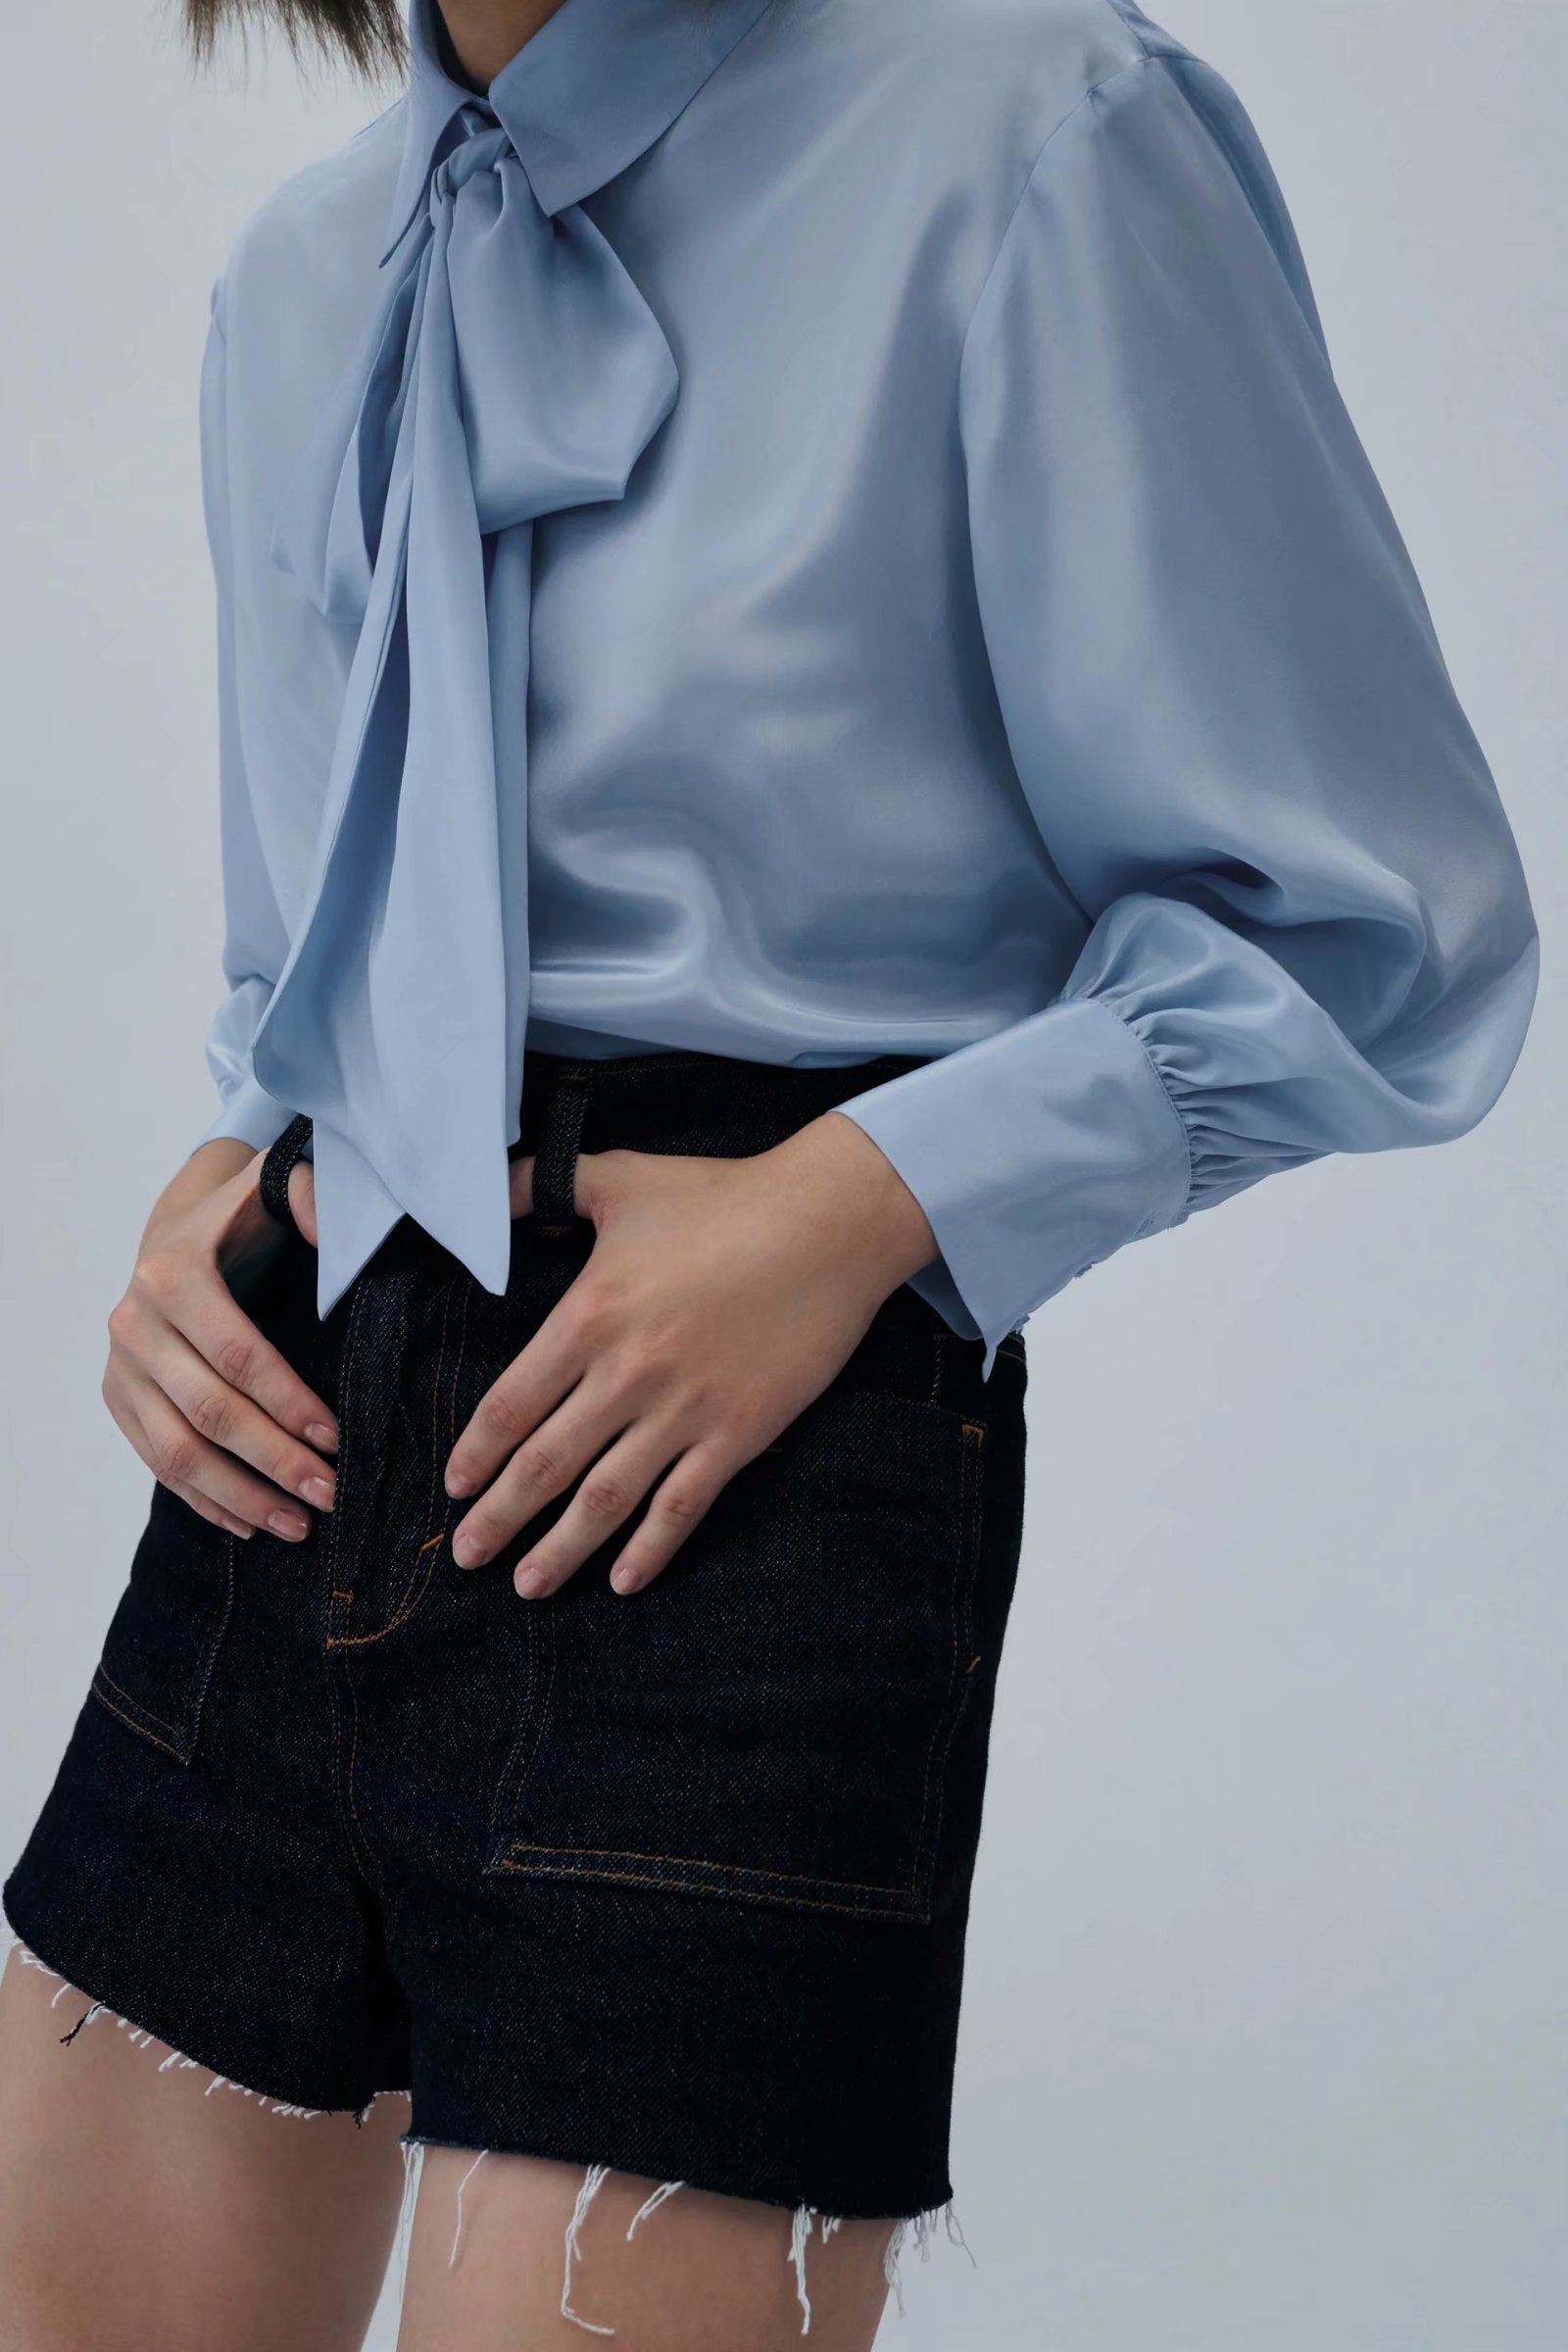 OOTDGIRL New Women Elegant Bow Tie Blue Blouse Shirt Long Sleeve Lapel Collar Office Ladies Shirts Female Chic Tops Summer Blusas